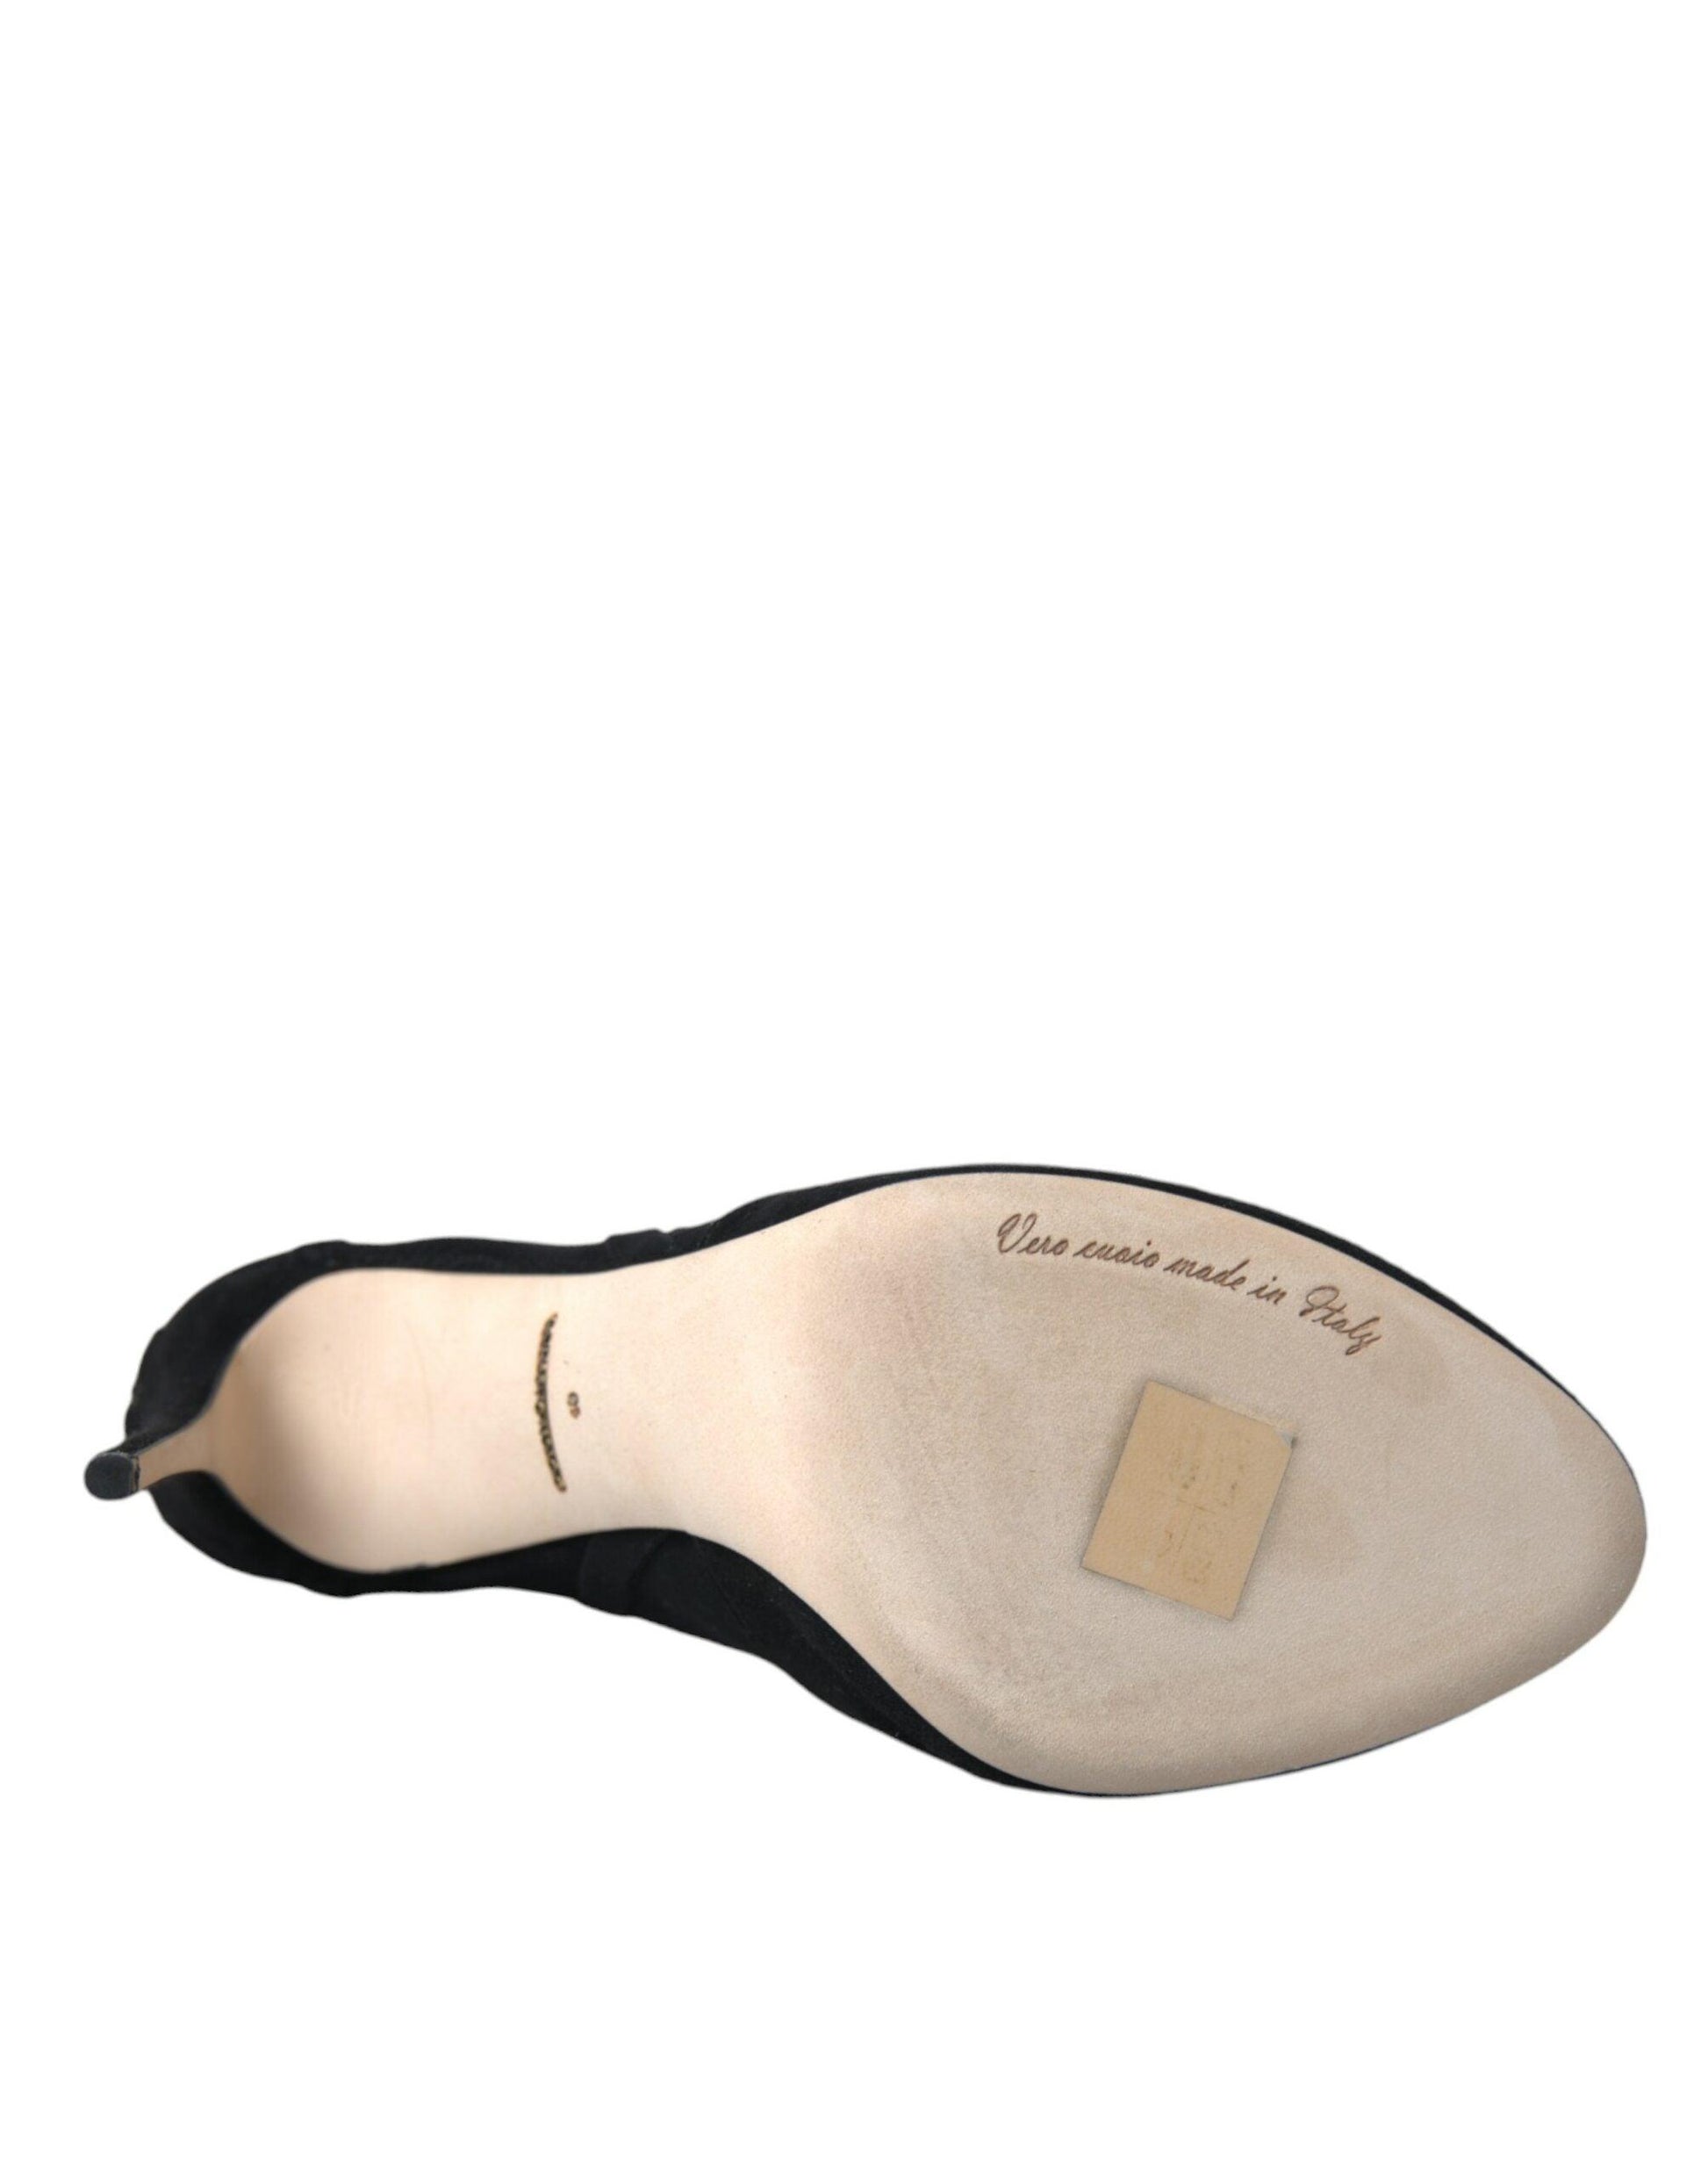 Dolce & Gabbana Black Mesh Stiletto Heels Ankle Boots Shoes - PER.FASHION